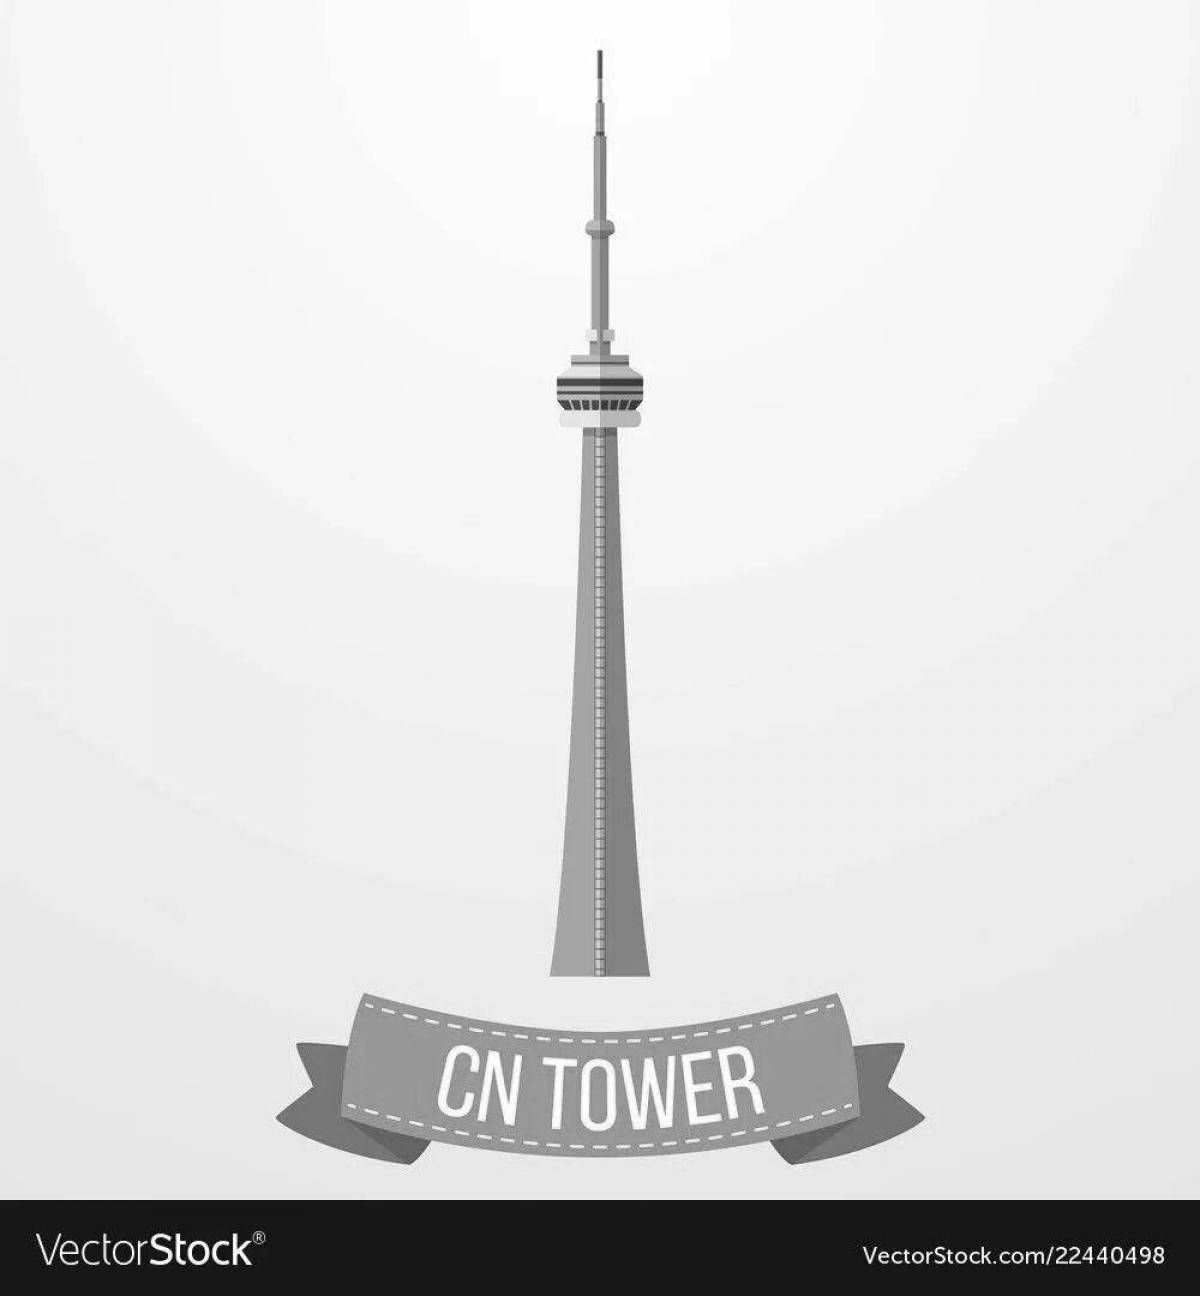 Wonderful coloring CN tower